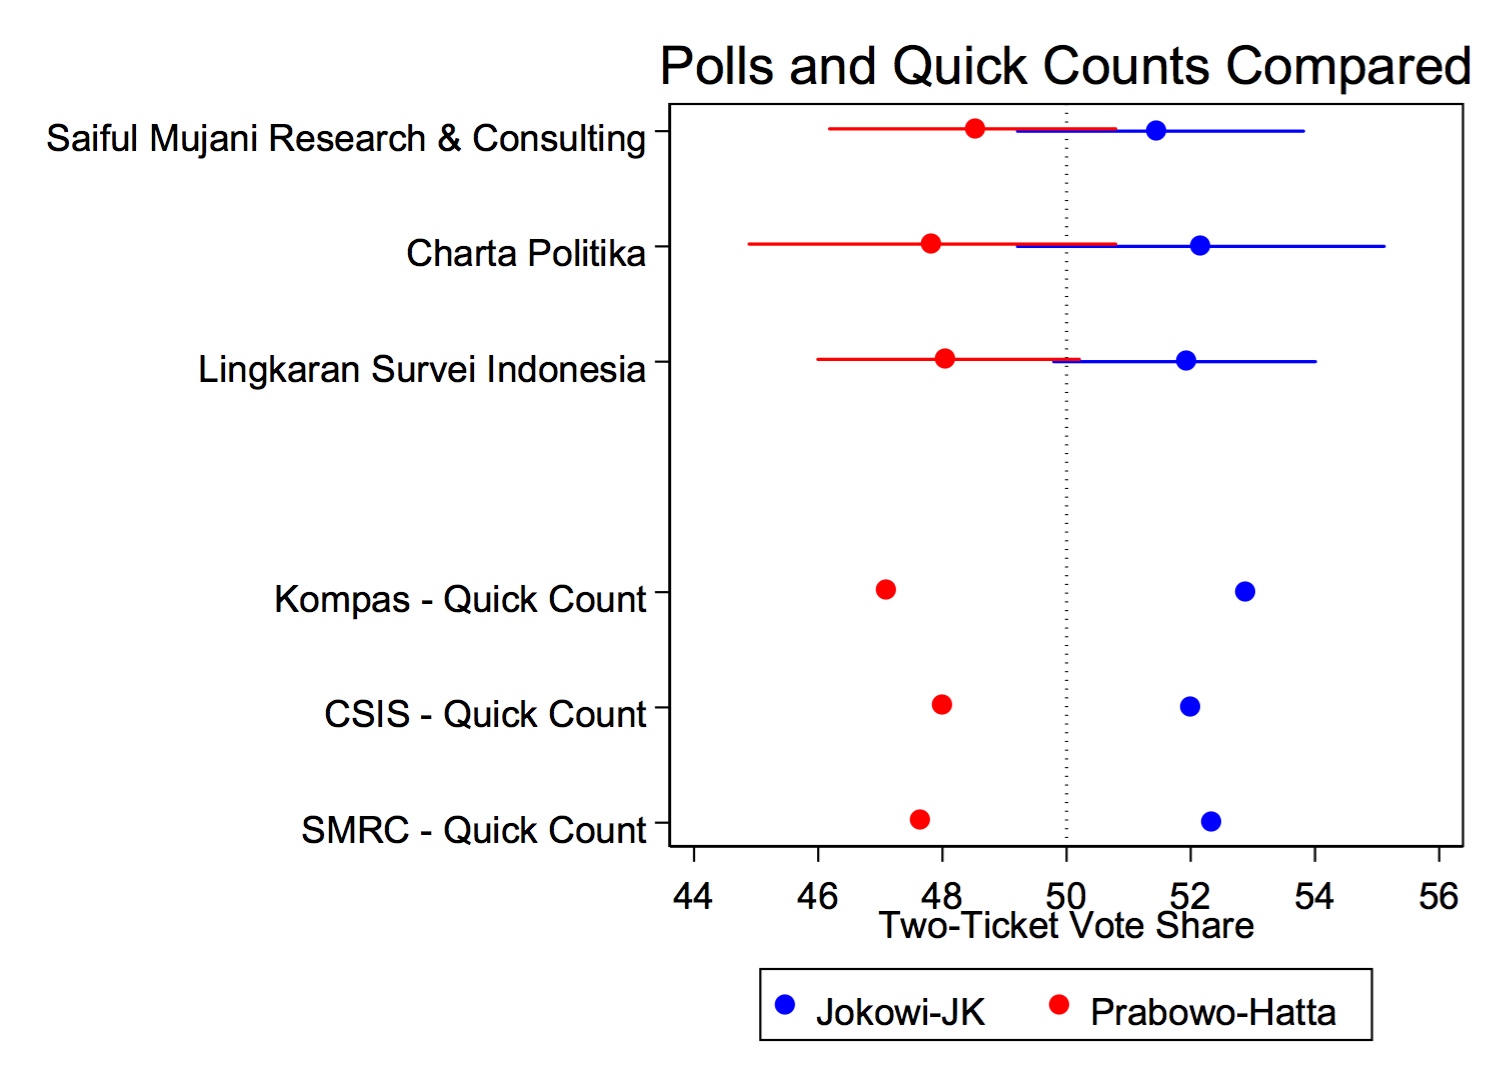 選後初步的quick count結果 https://tompepinsky.files.wordpress.com/2014/07/polls-quickcounts.jpg